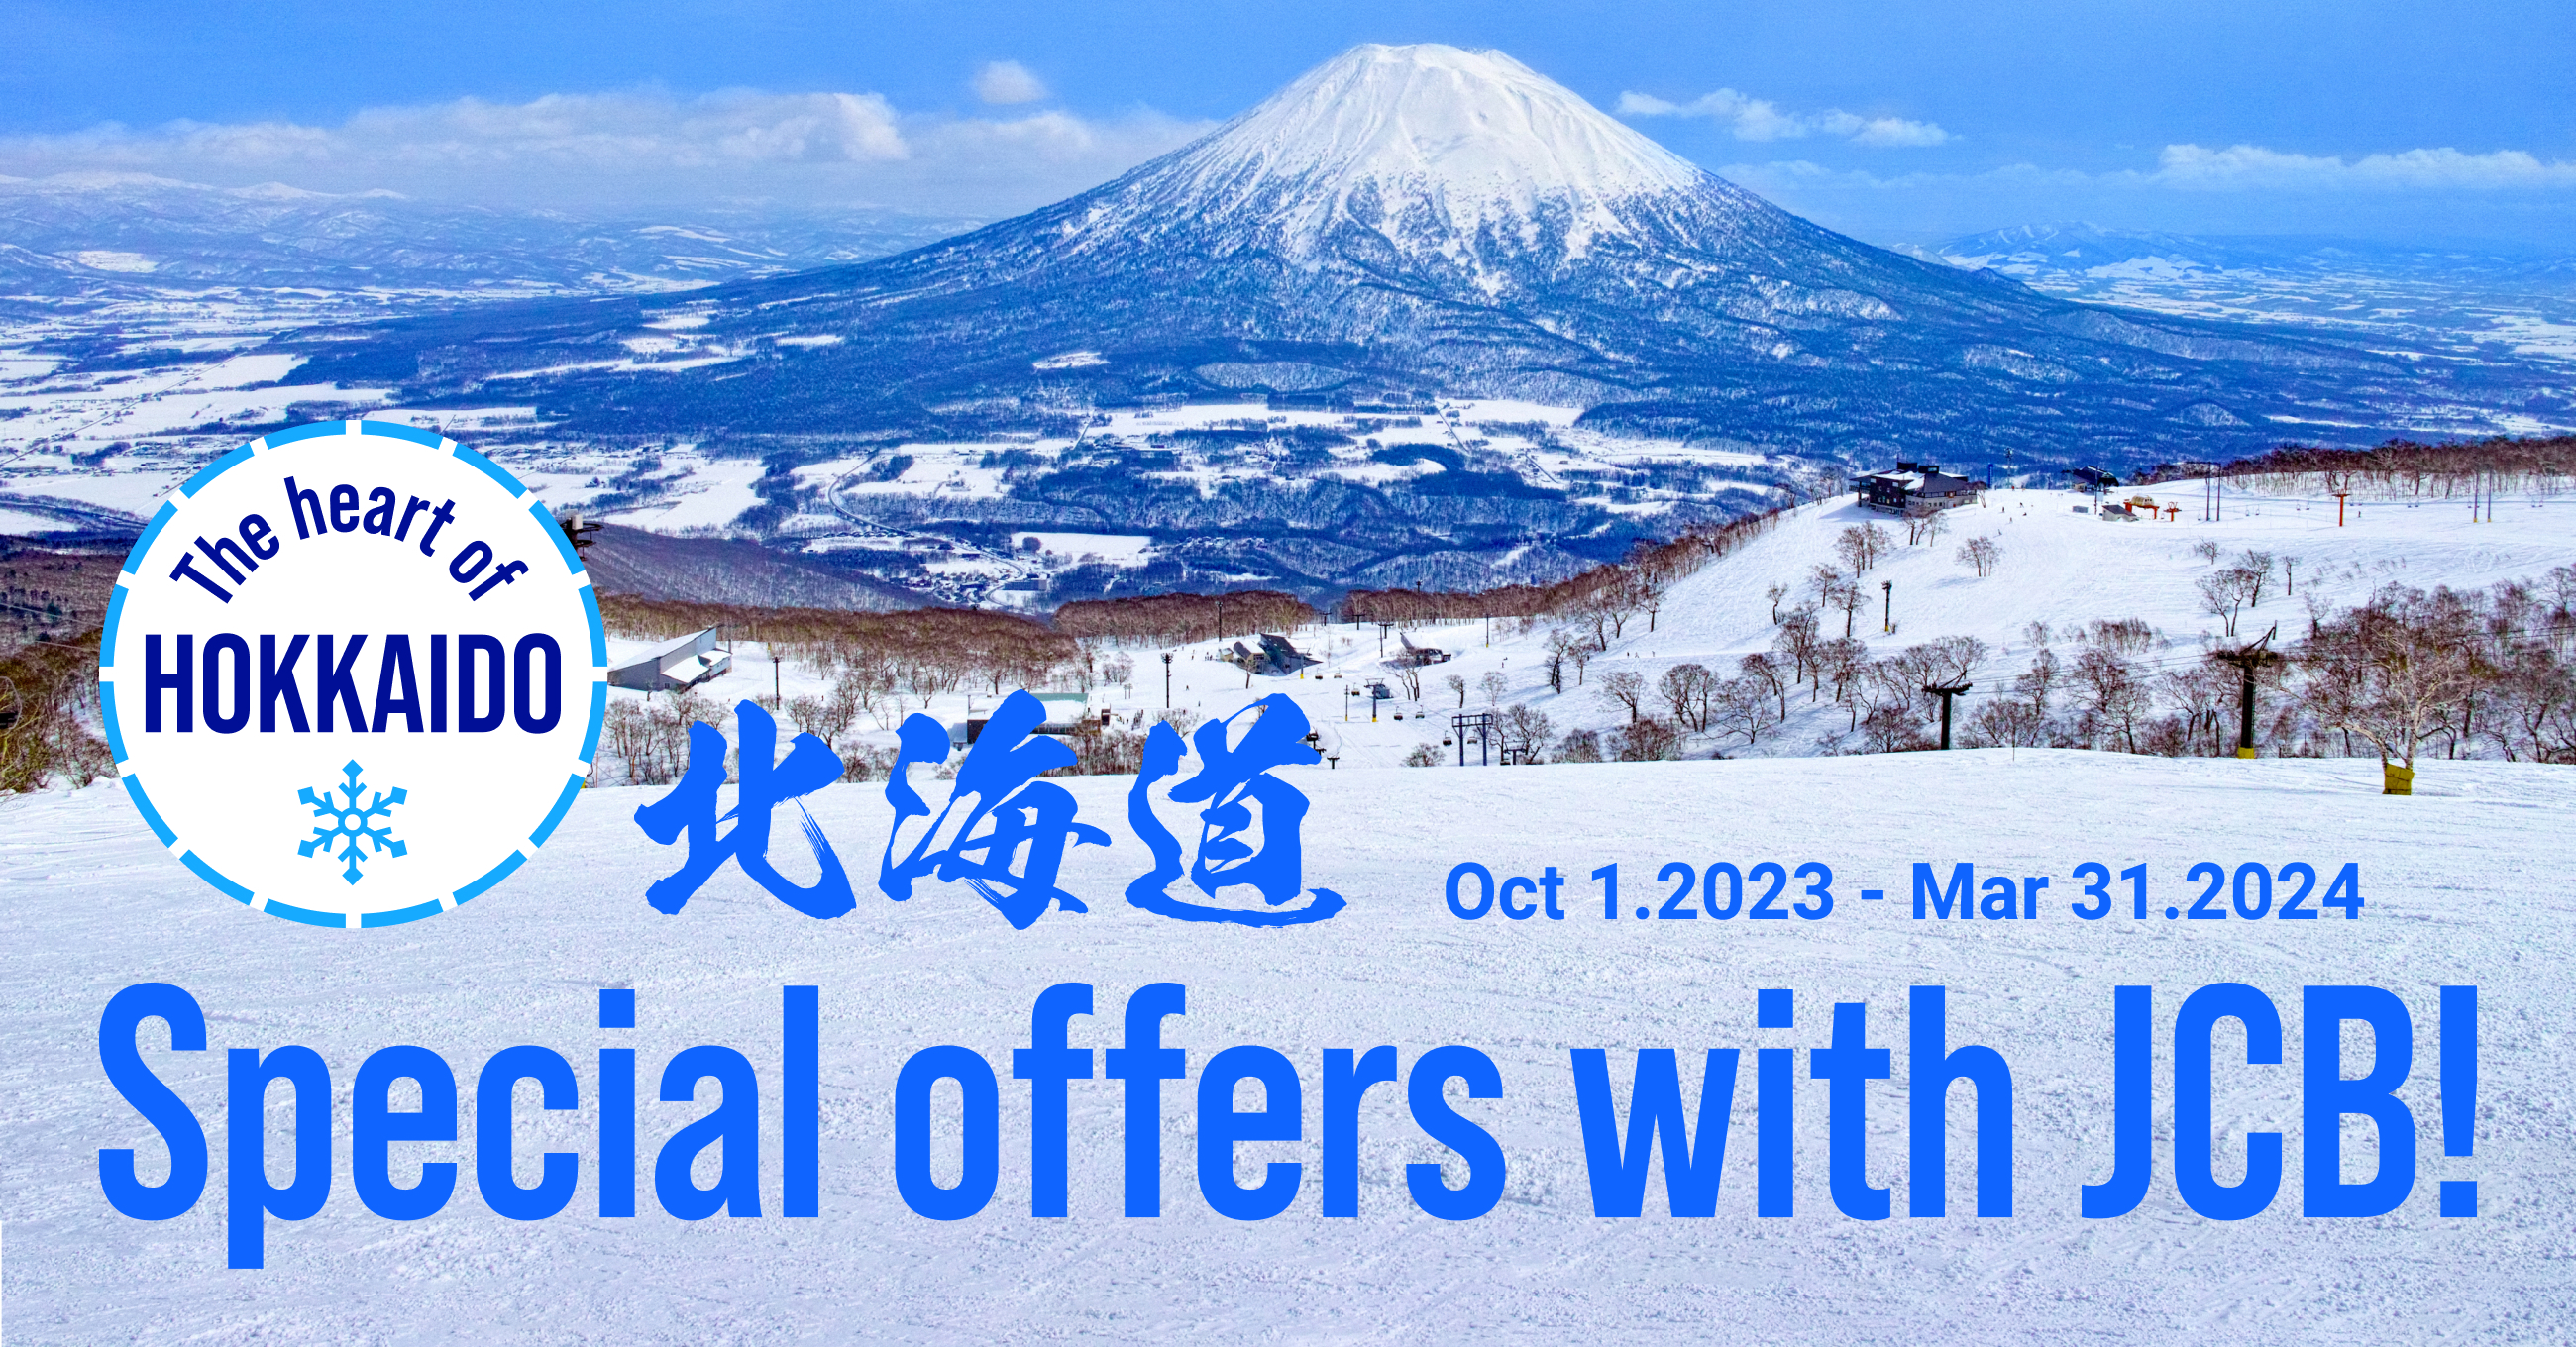 北海道 Special offers with JCB!